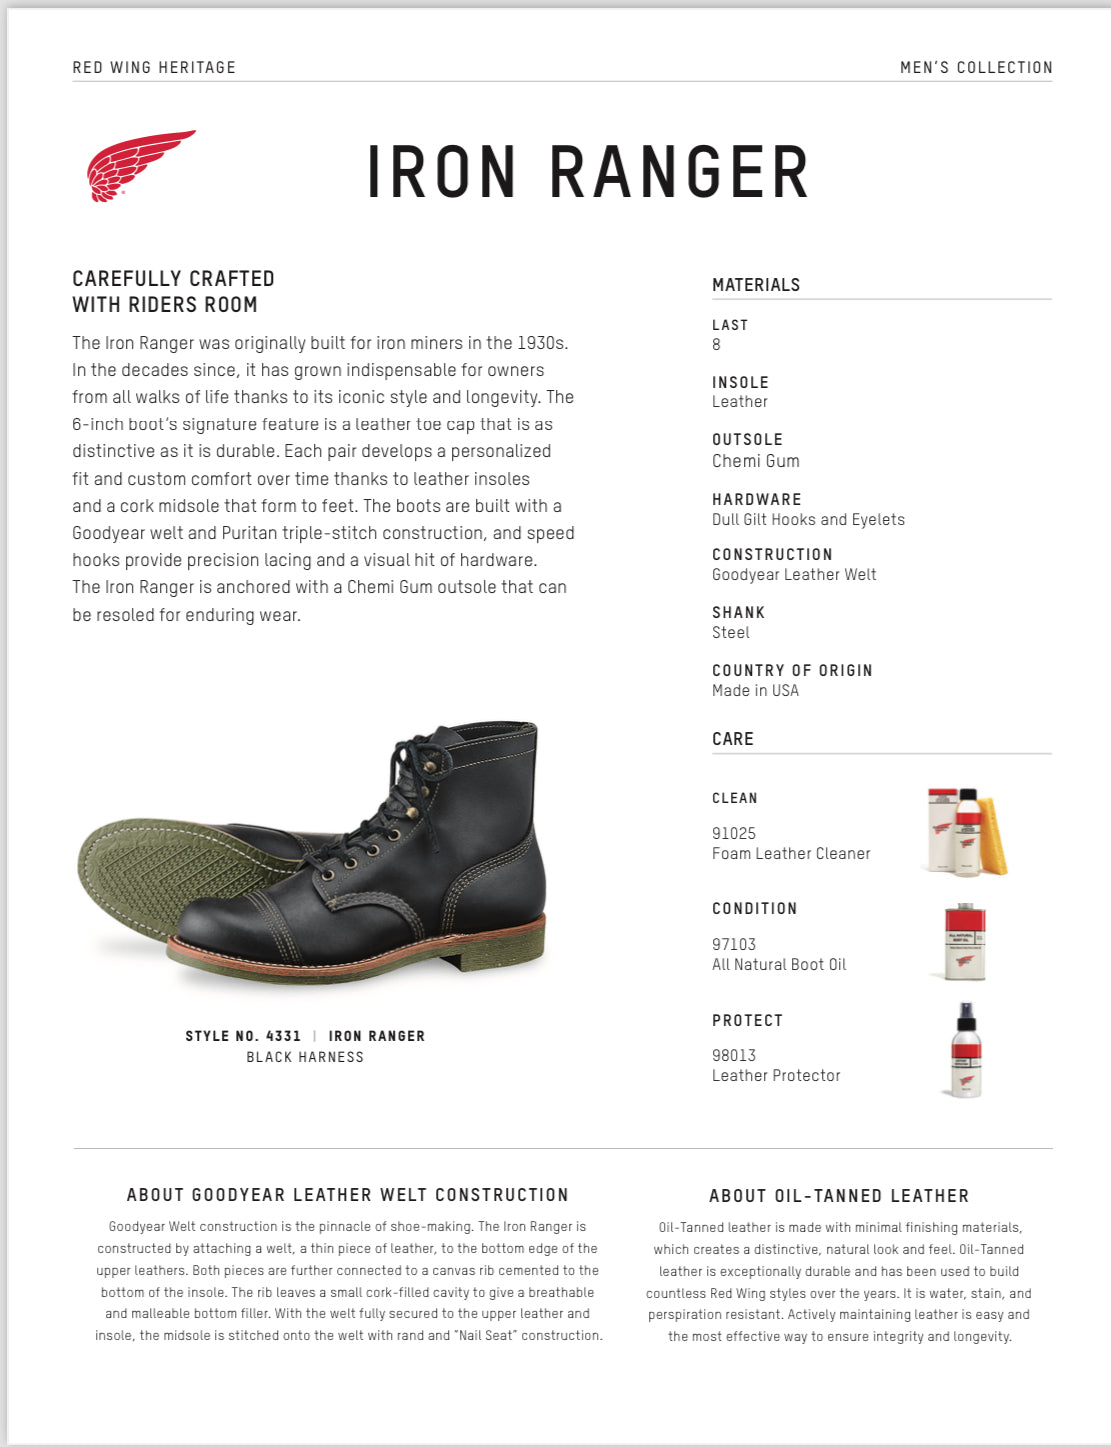 Iron Ranger 4331 Limited Editon